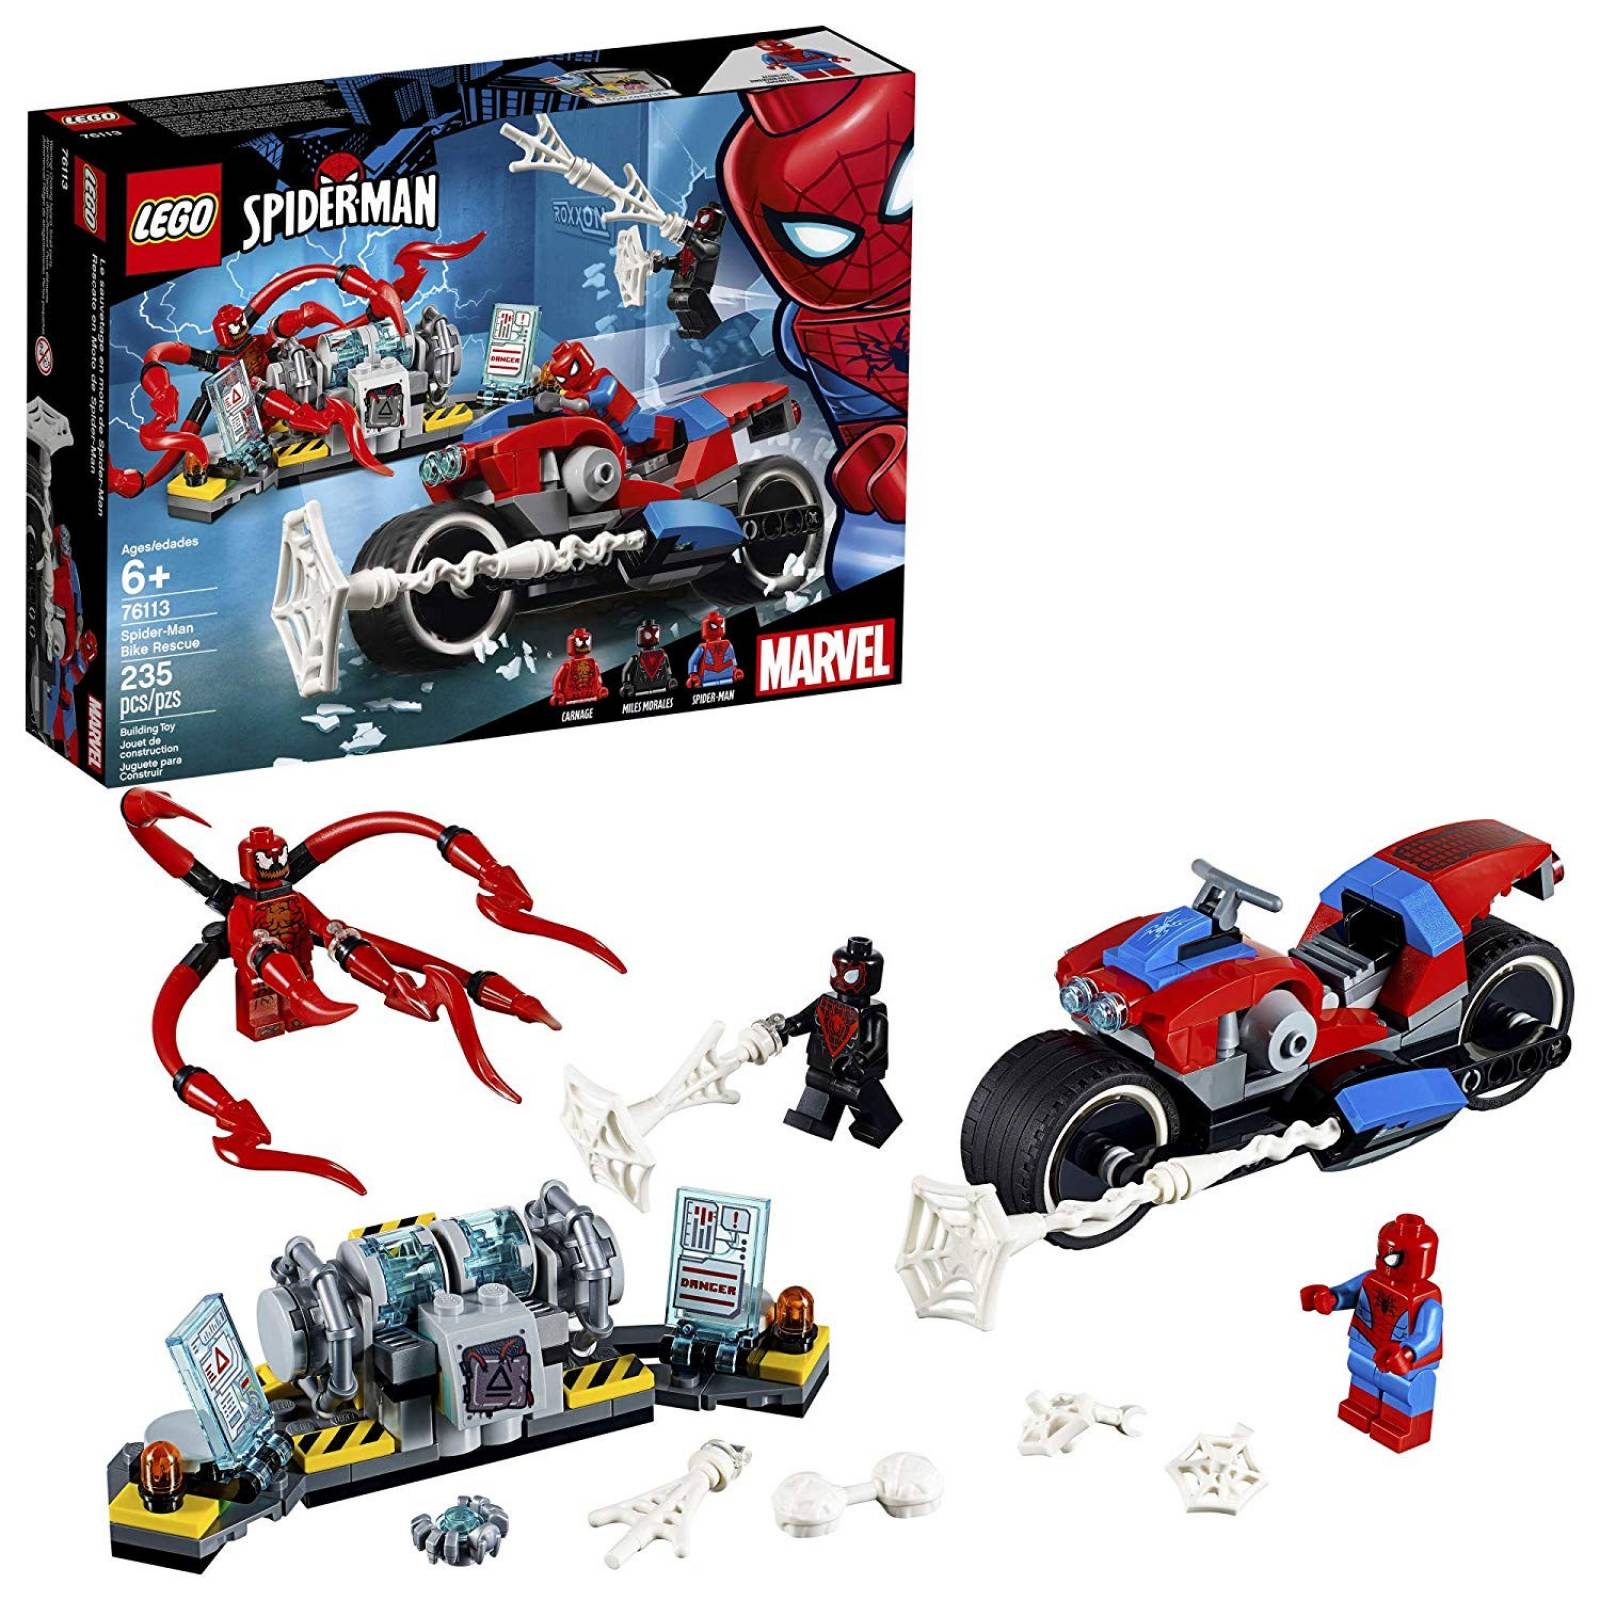 Juguete para construir LEGO 6251072 Spiderman Bike 235pzs